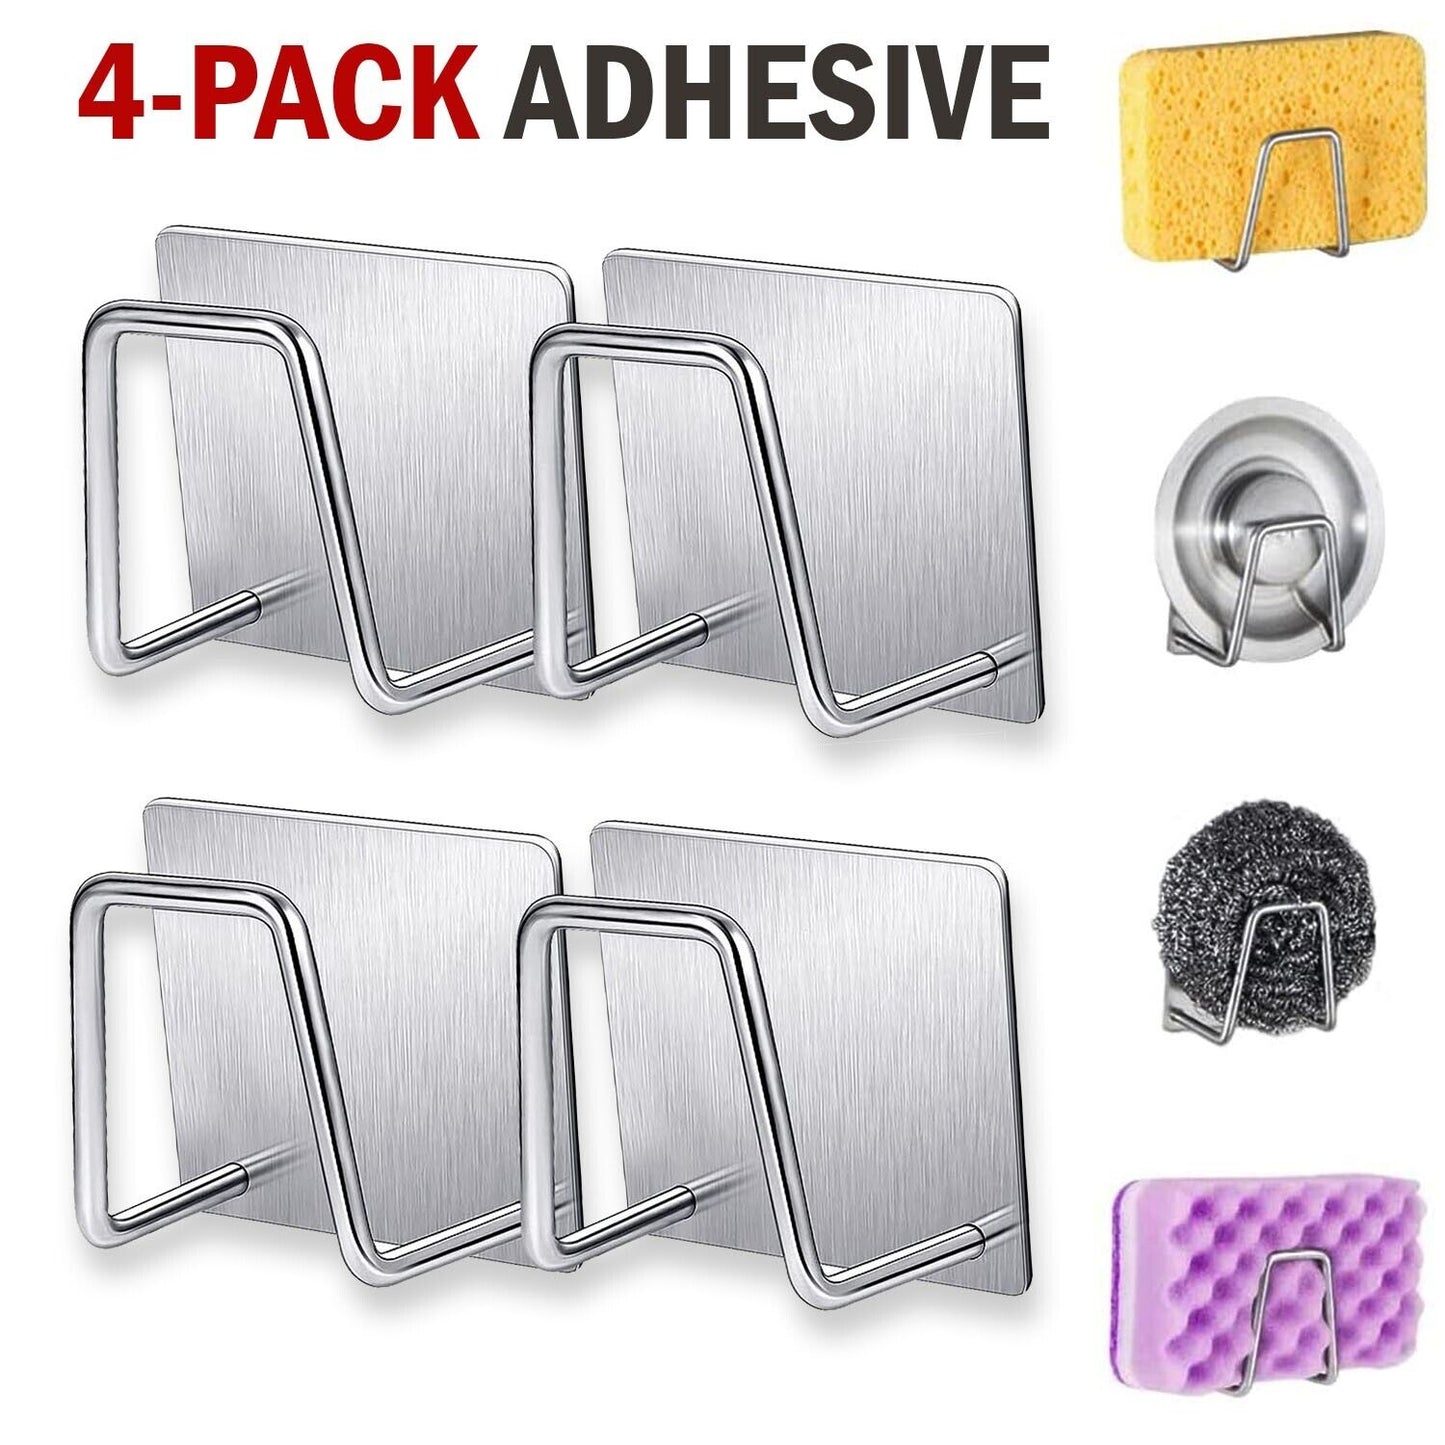 Stainless Steel Adhesive Sponge Holder (4-Pack)